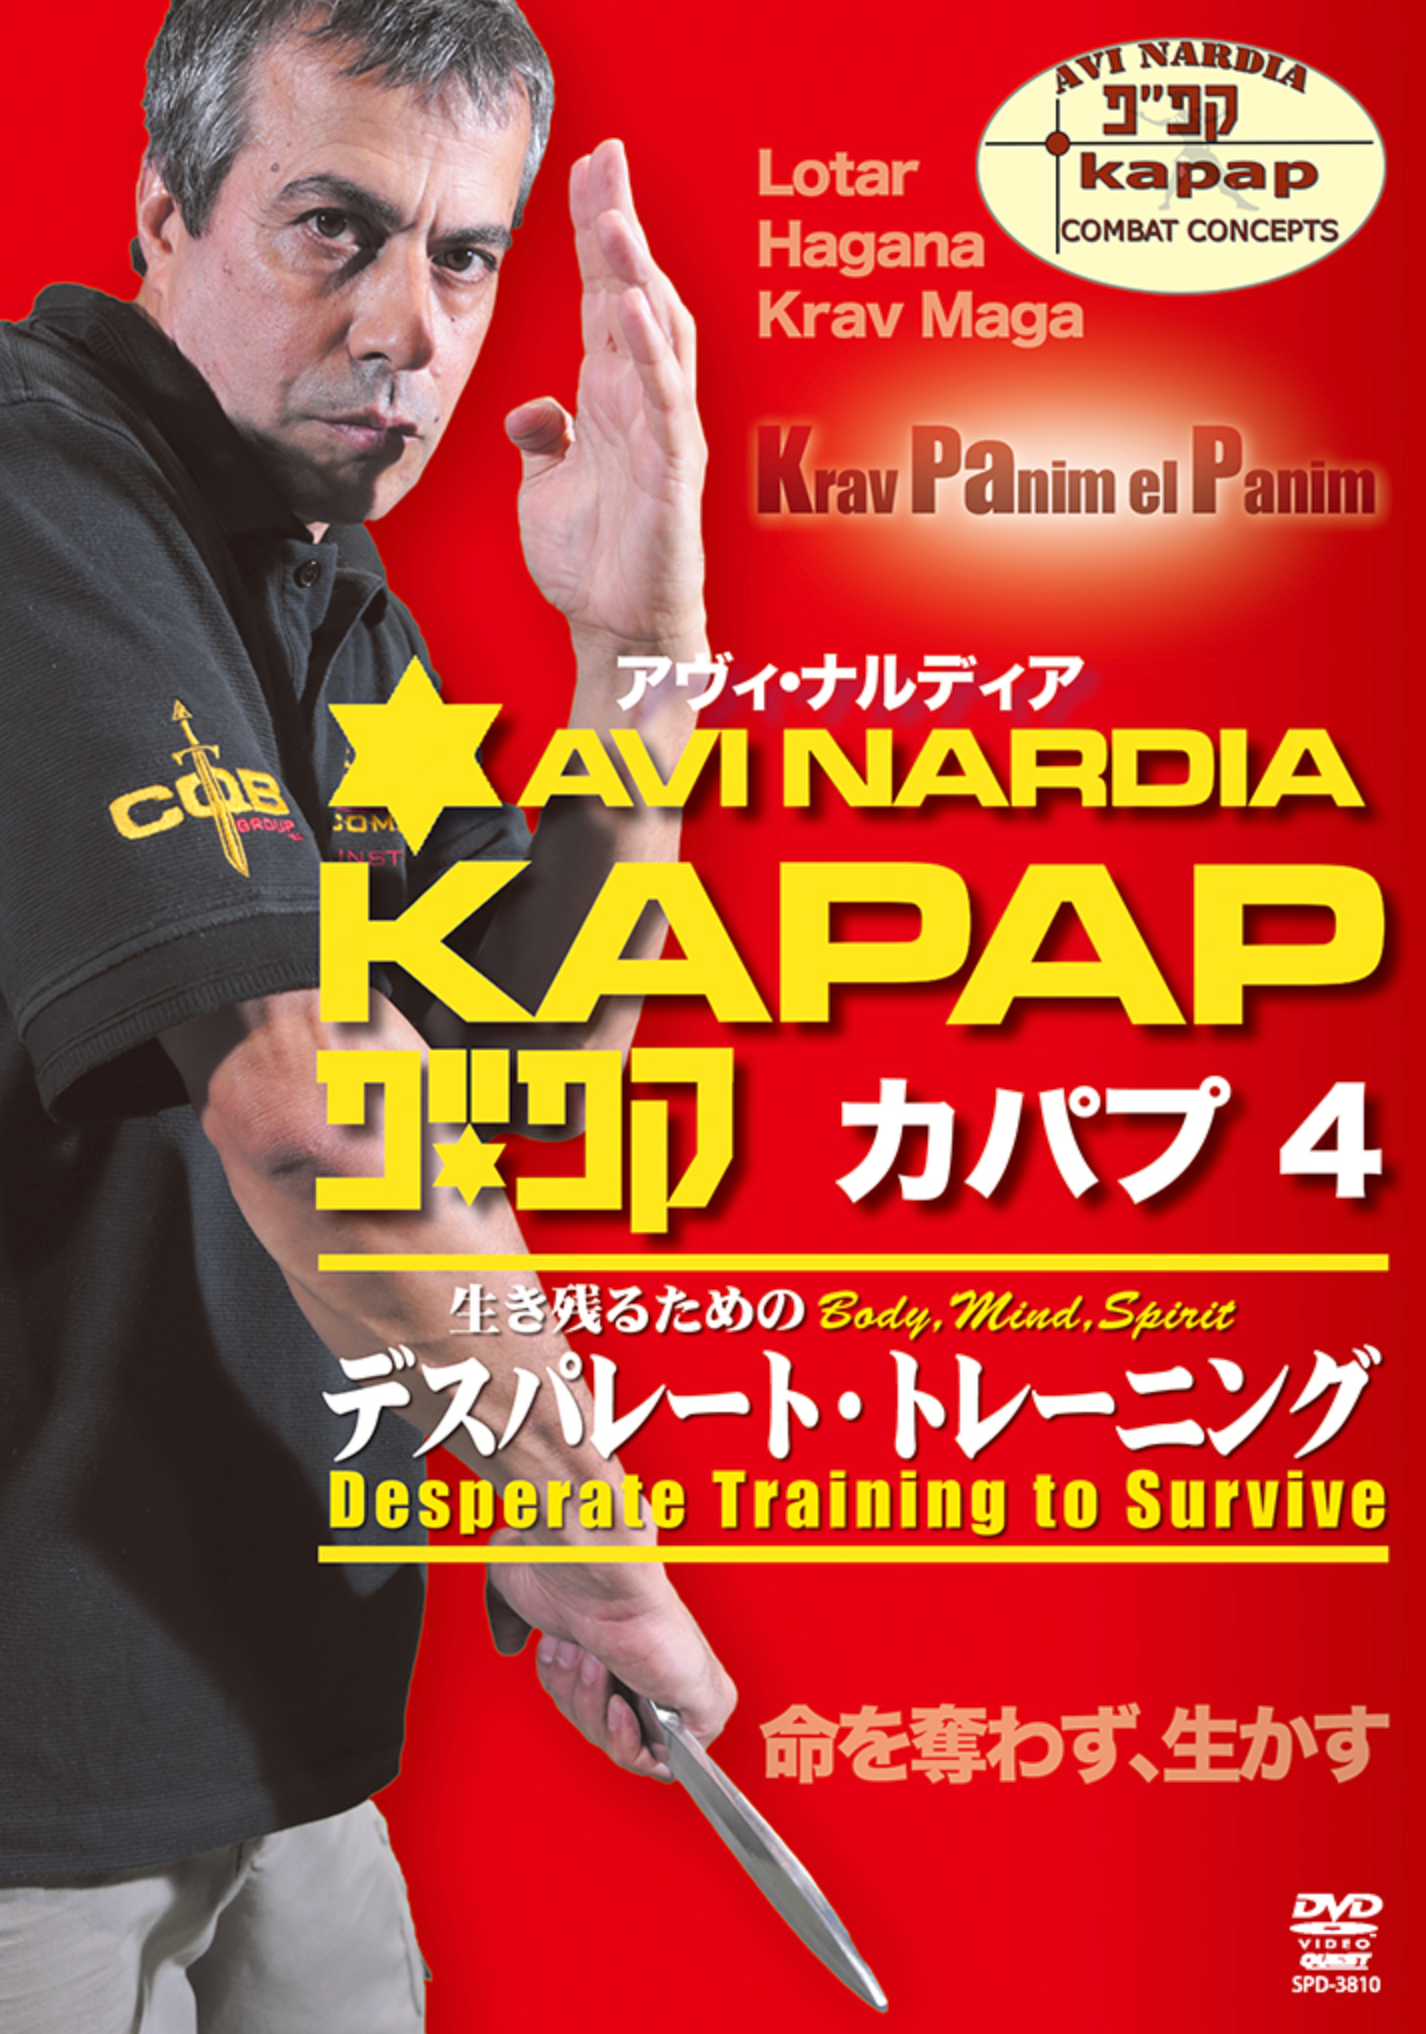 Kapap 4: Desperate Training to Survive DVD by Avi Nardia - Budovideos Inc